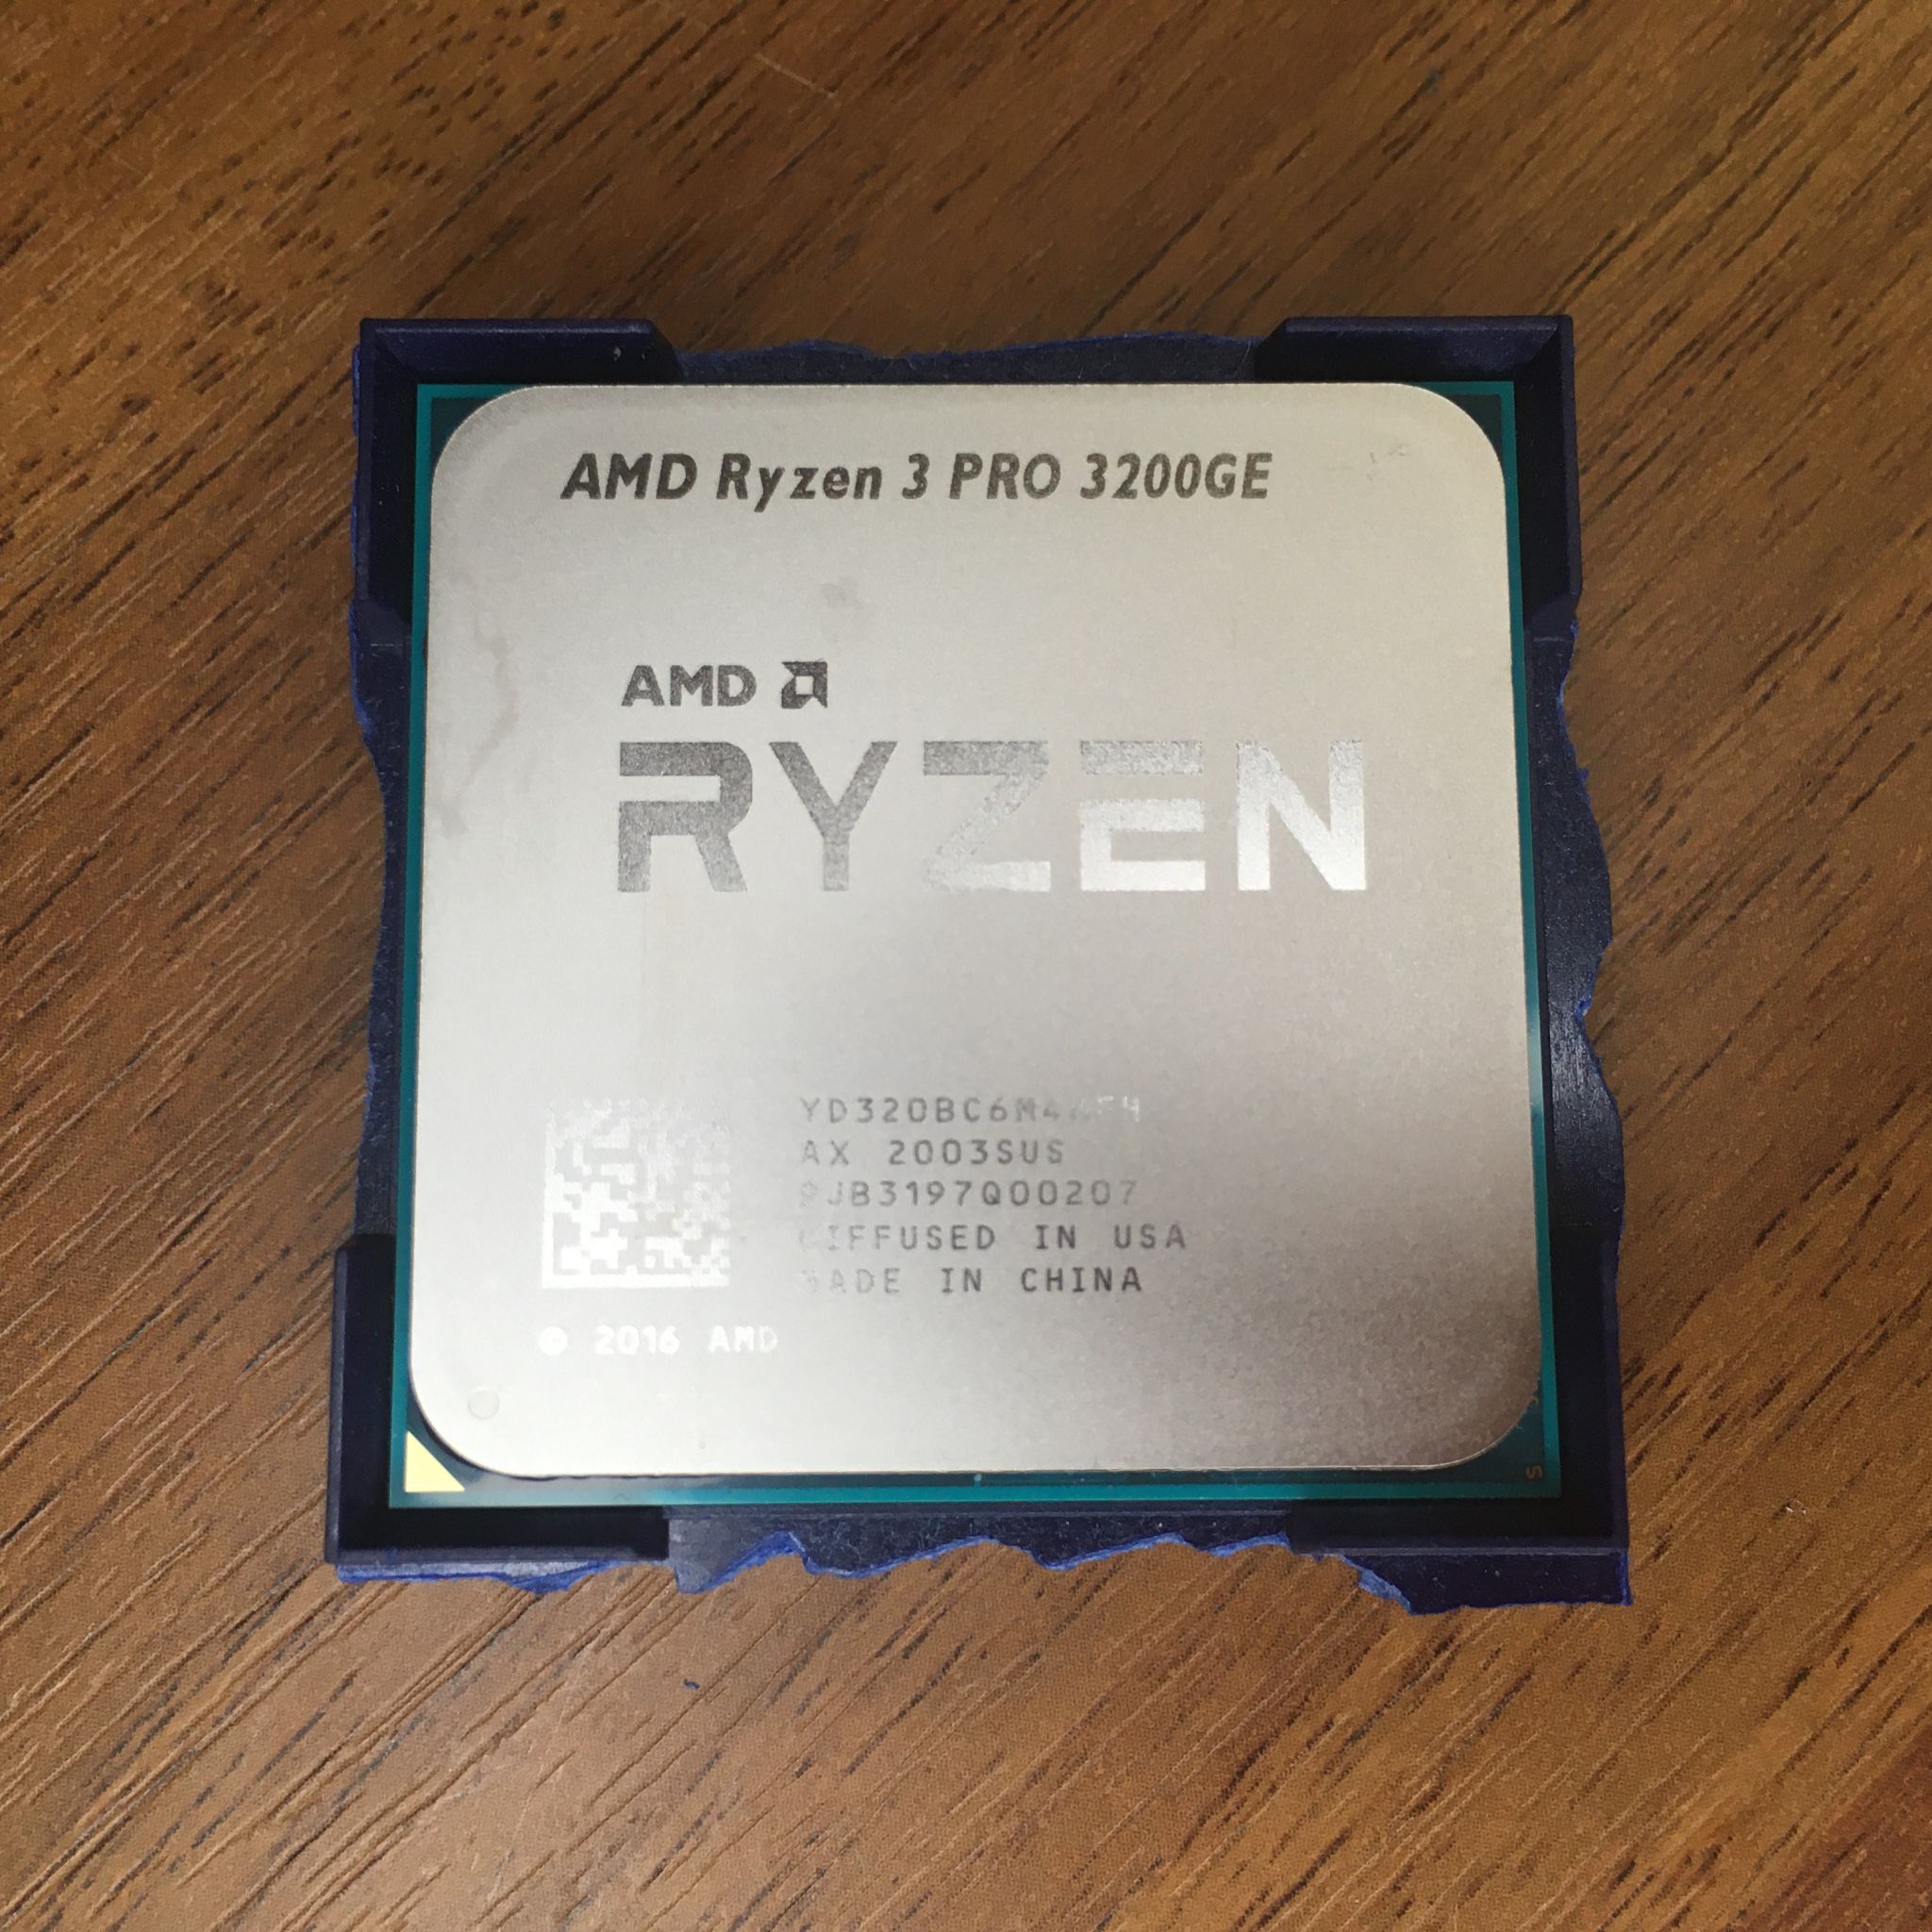 3 pro 3200g. AMD Ryzen 3 Pro 3200g. Процессор Ryzen 3 Pro 1200. AMD Ryzen 3 Pro 3200ge w/ Radeon Vega Graphics \. AMD Ryzen 3 Pro 3200g am4, 4 x 3600 МГЦ.